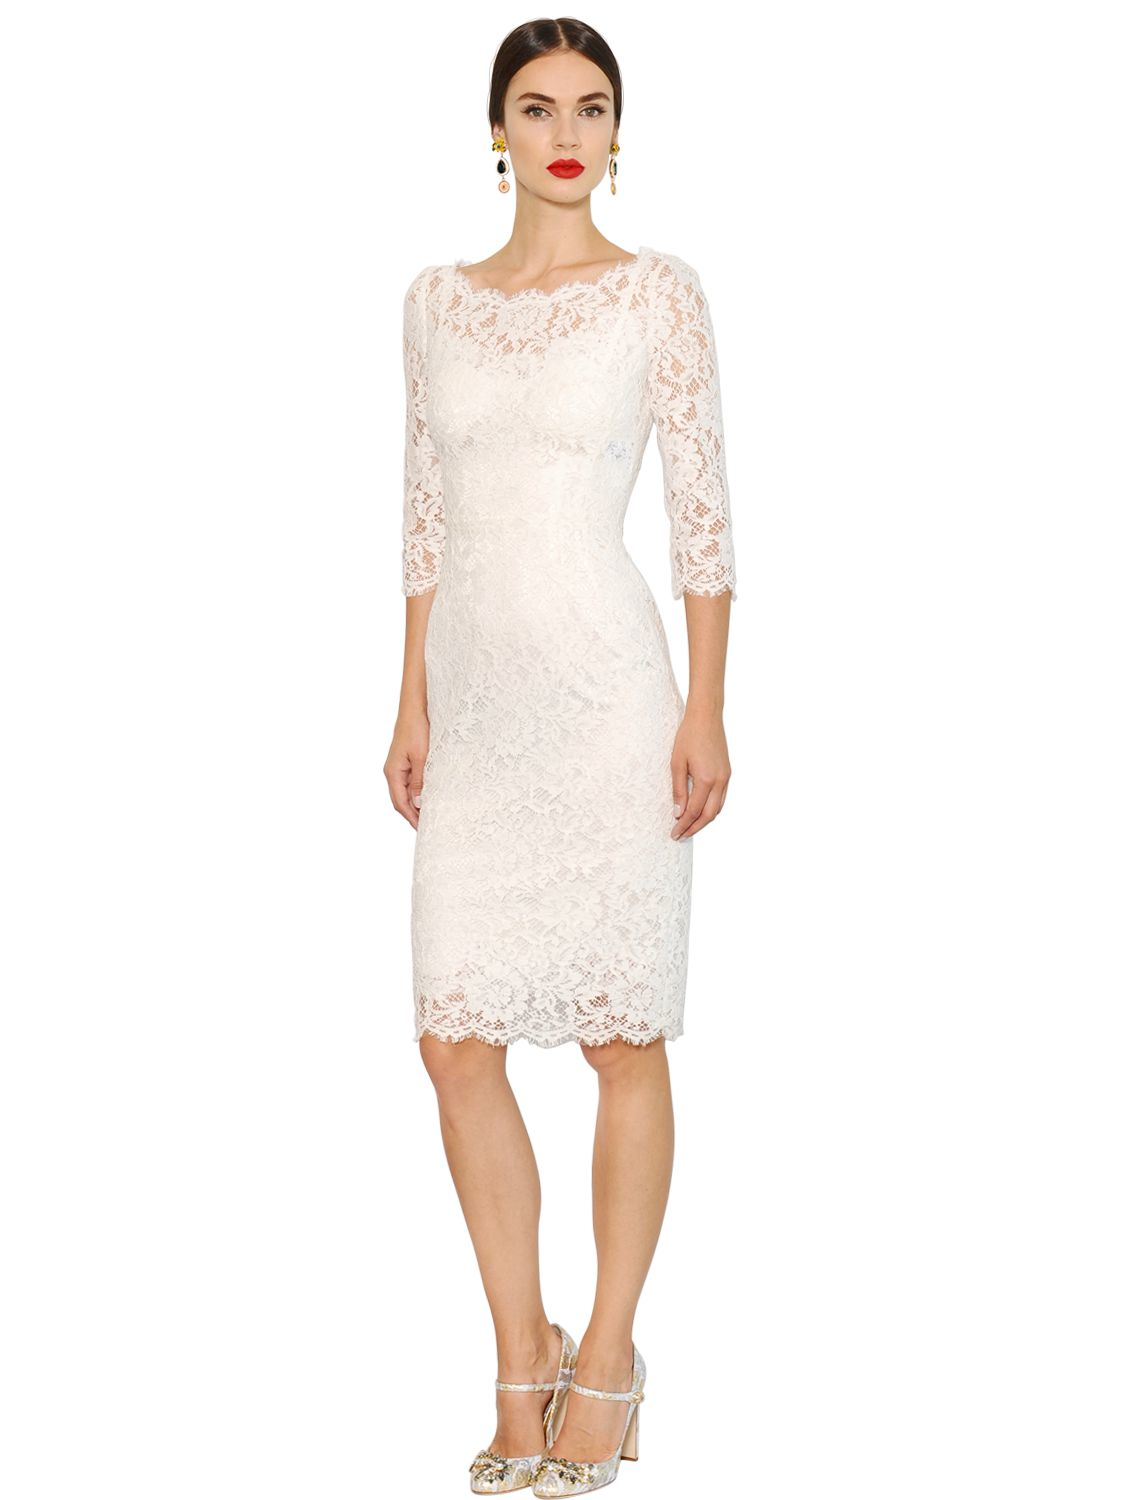 Paragraaf Eenvoud ballet Dolce & Gabbana Cordonetto Lace Dress in White - Lyst